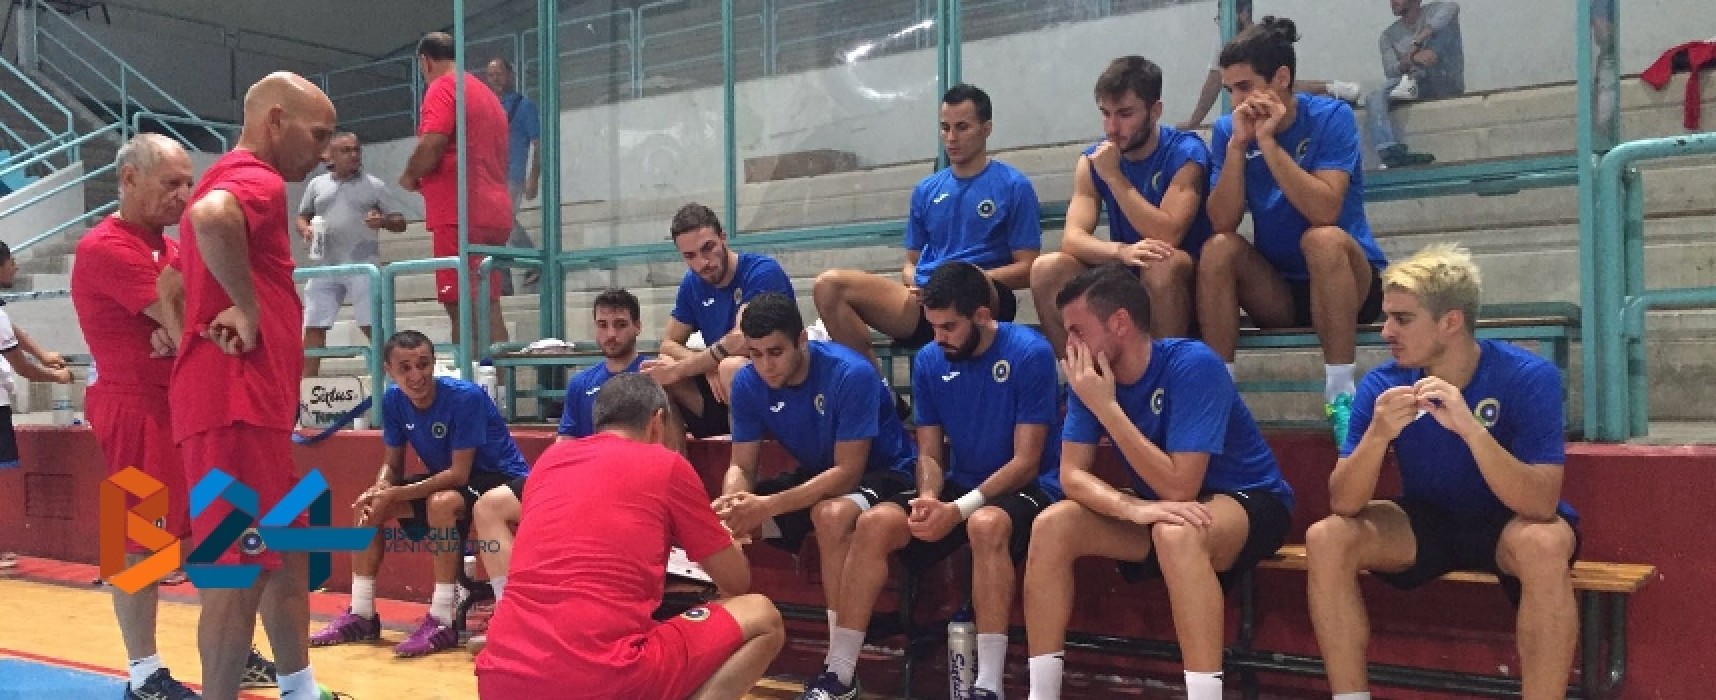 DIRETTA LIVE: Futsal Bisceglie – Sammichele 8-0 FINALE